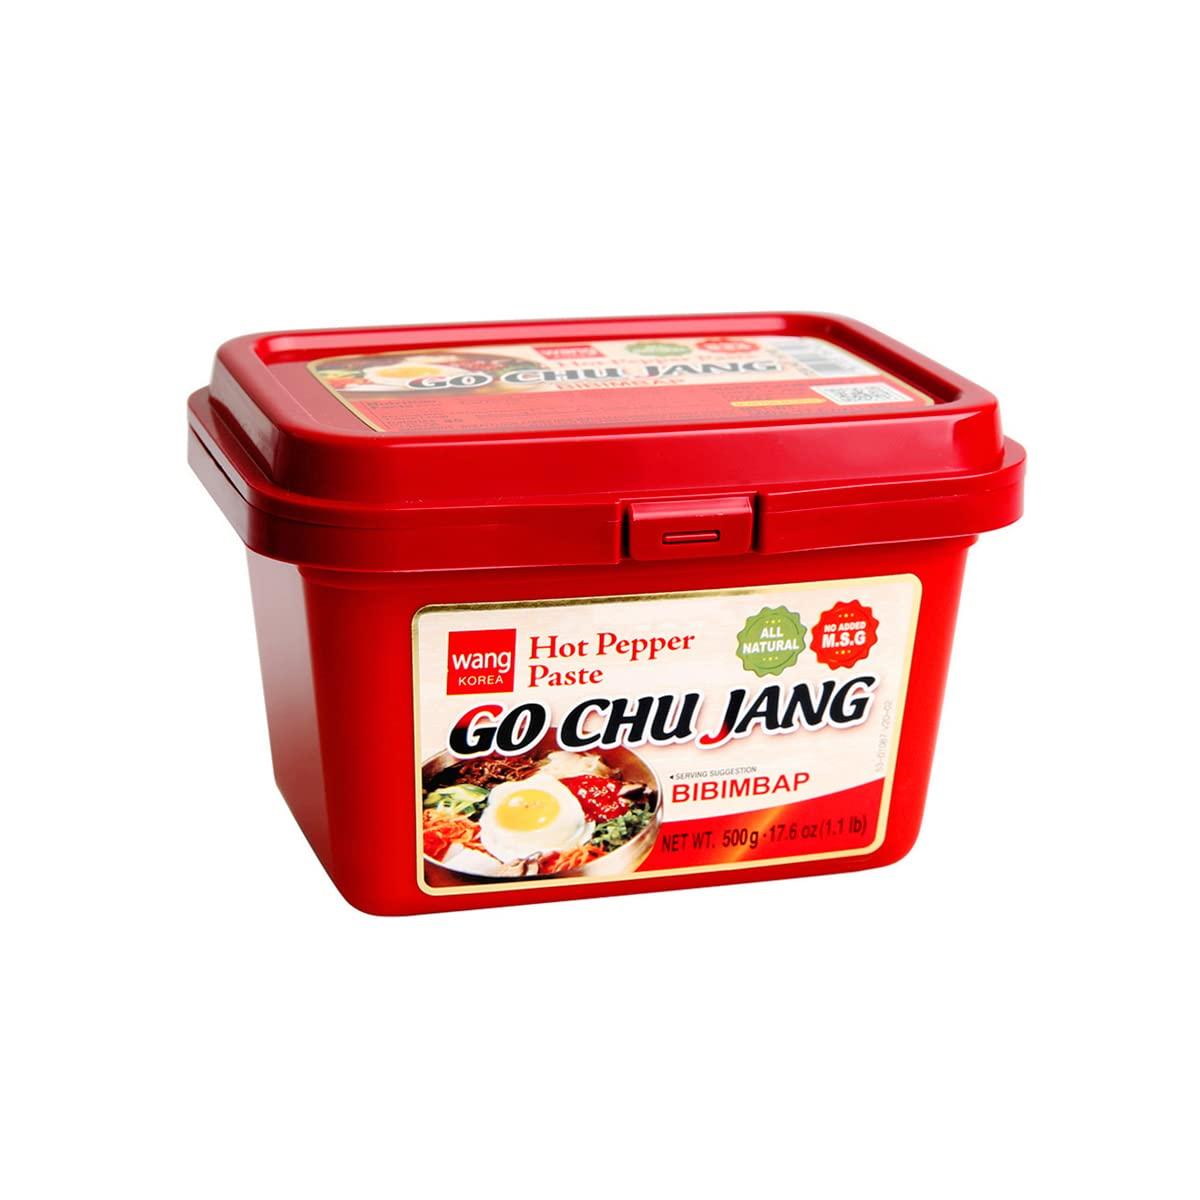 Wang Gochujang Korean Red Pepper Paste 1.1 Pound 1.1 Pound (Pack of 1)